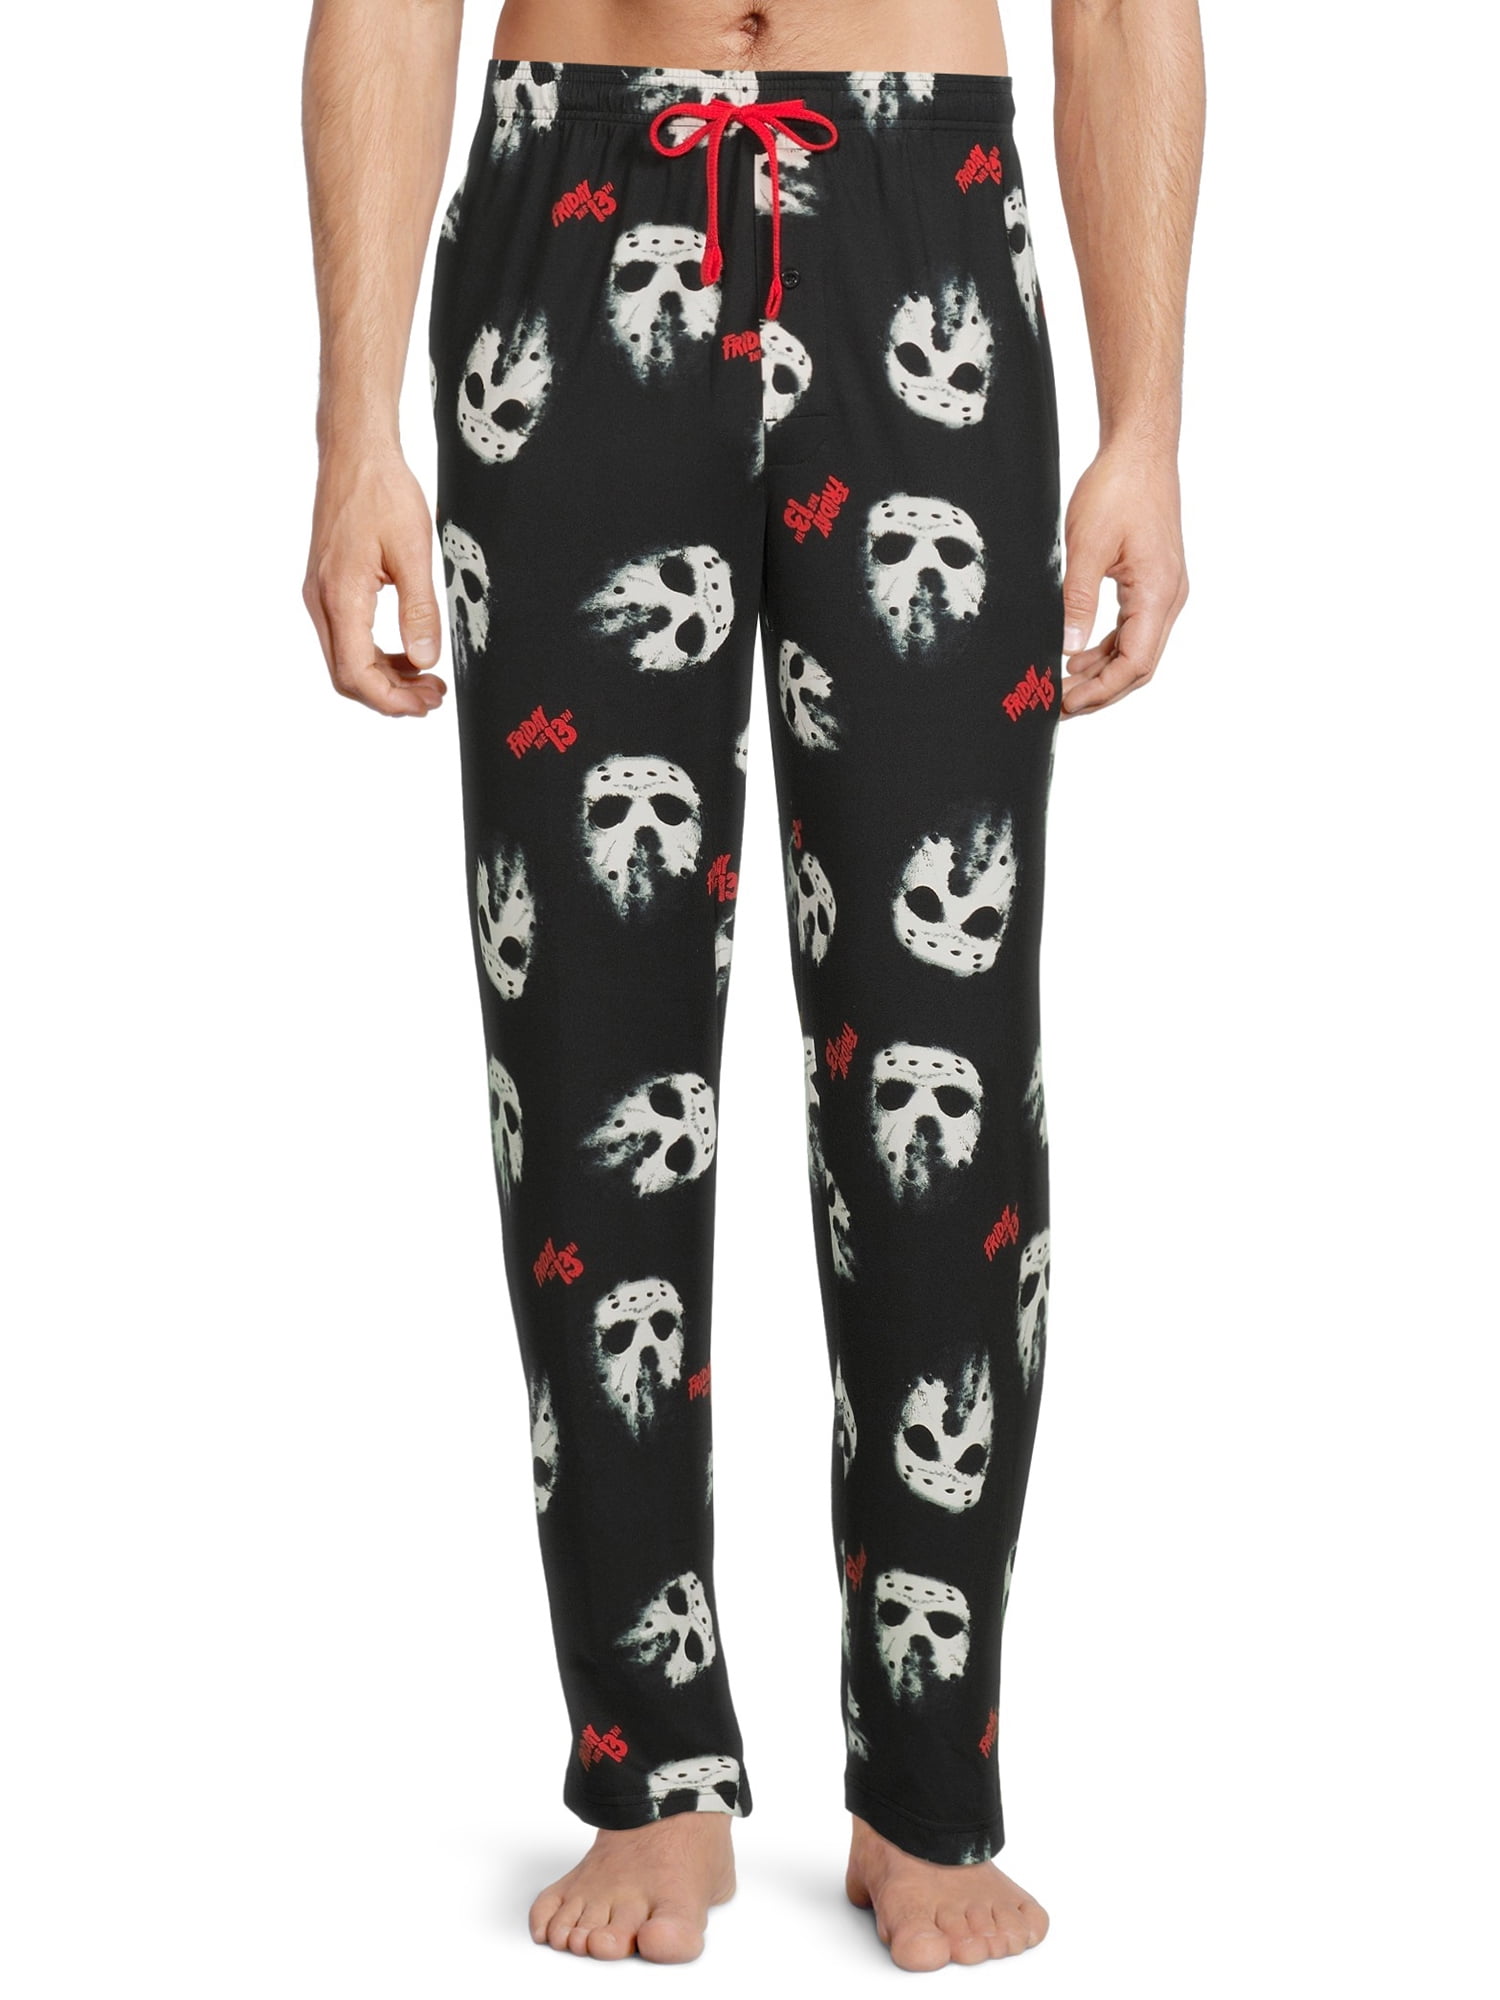 Friday The 13th Men's Sleep Pants, Size S-2XL - Walmart.com